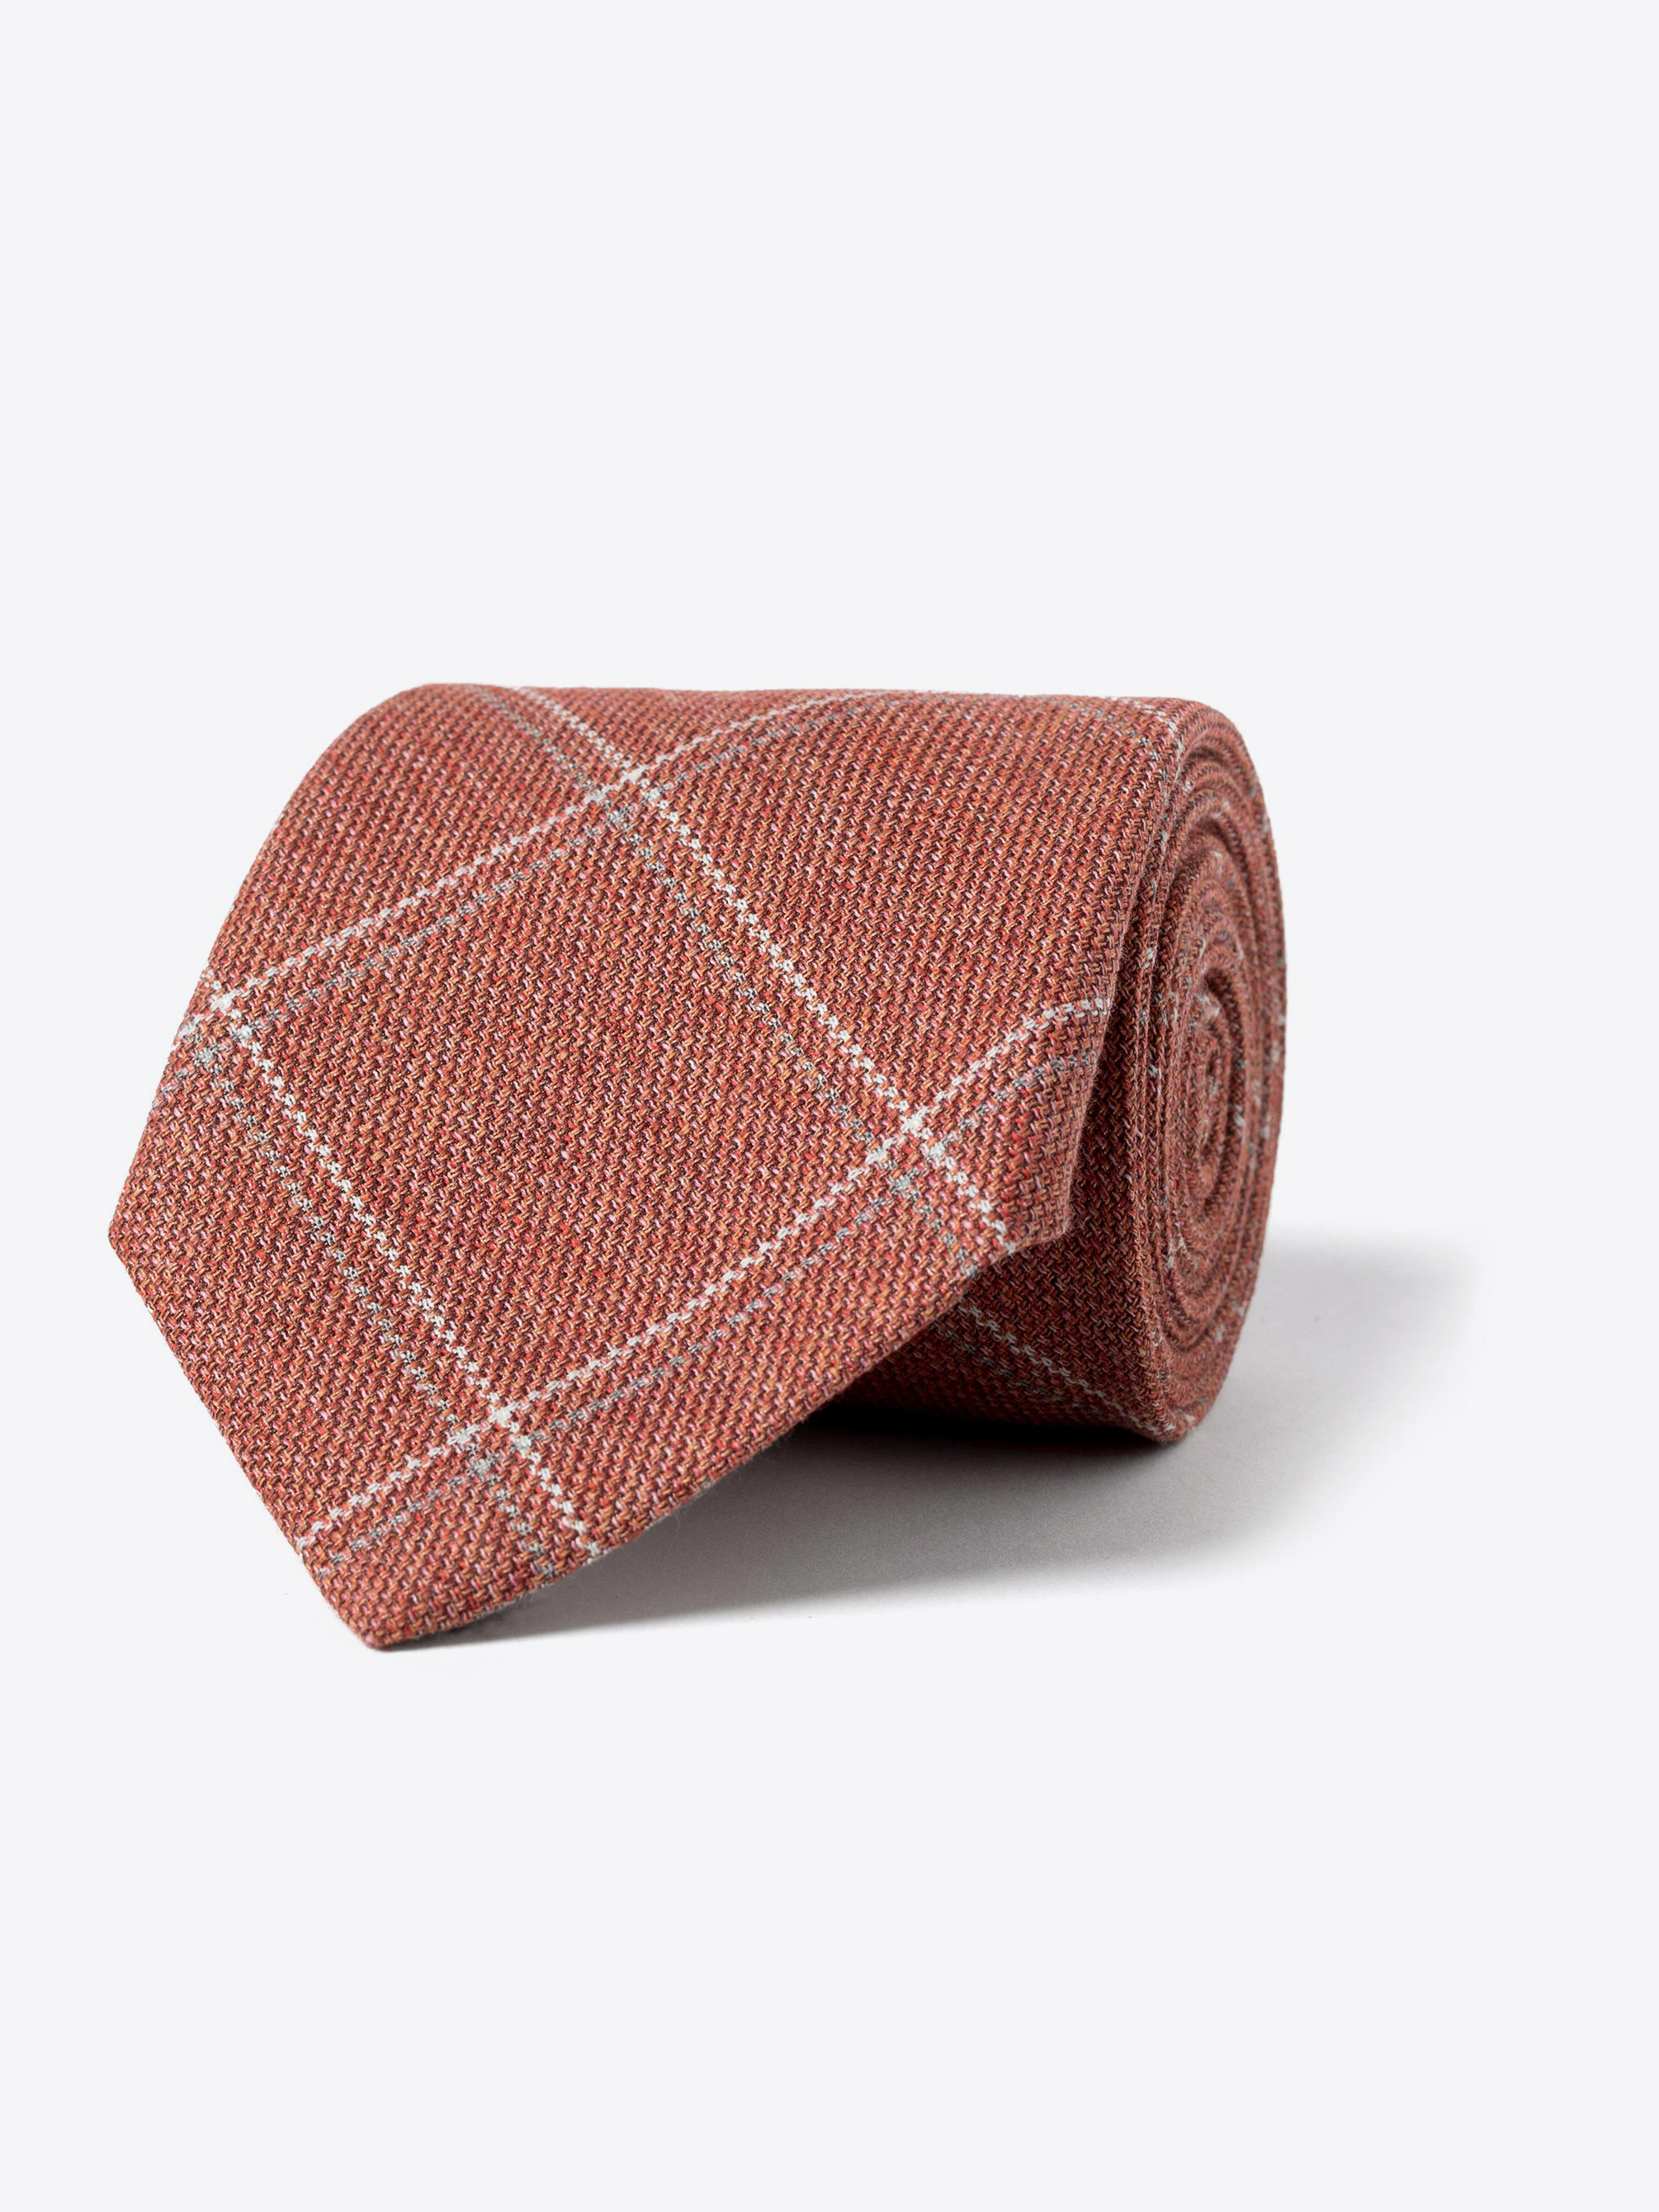 Zoom Image of Sienna Cotton Wool and Silk Windowpane Tie